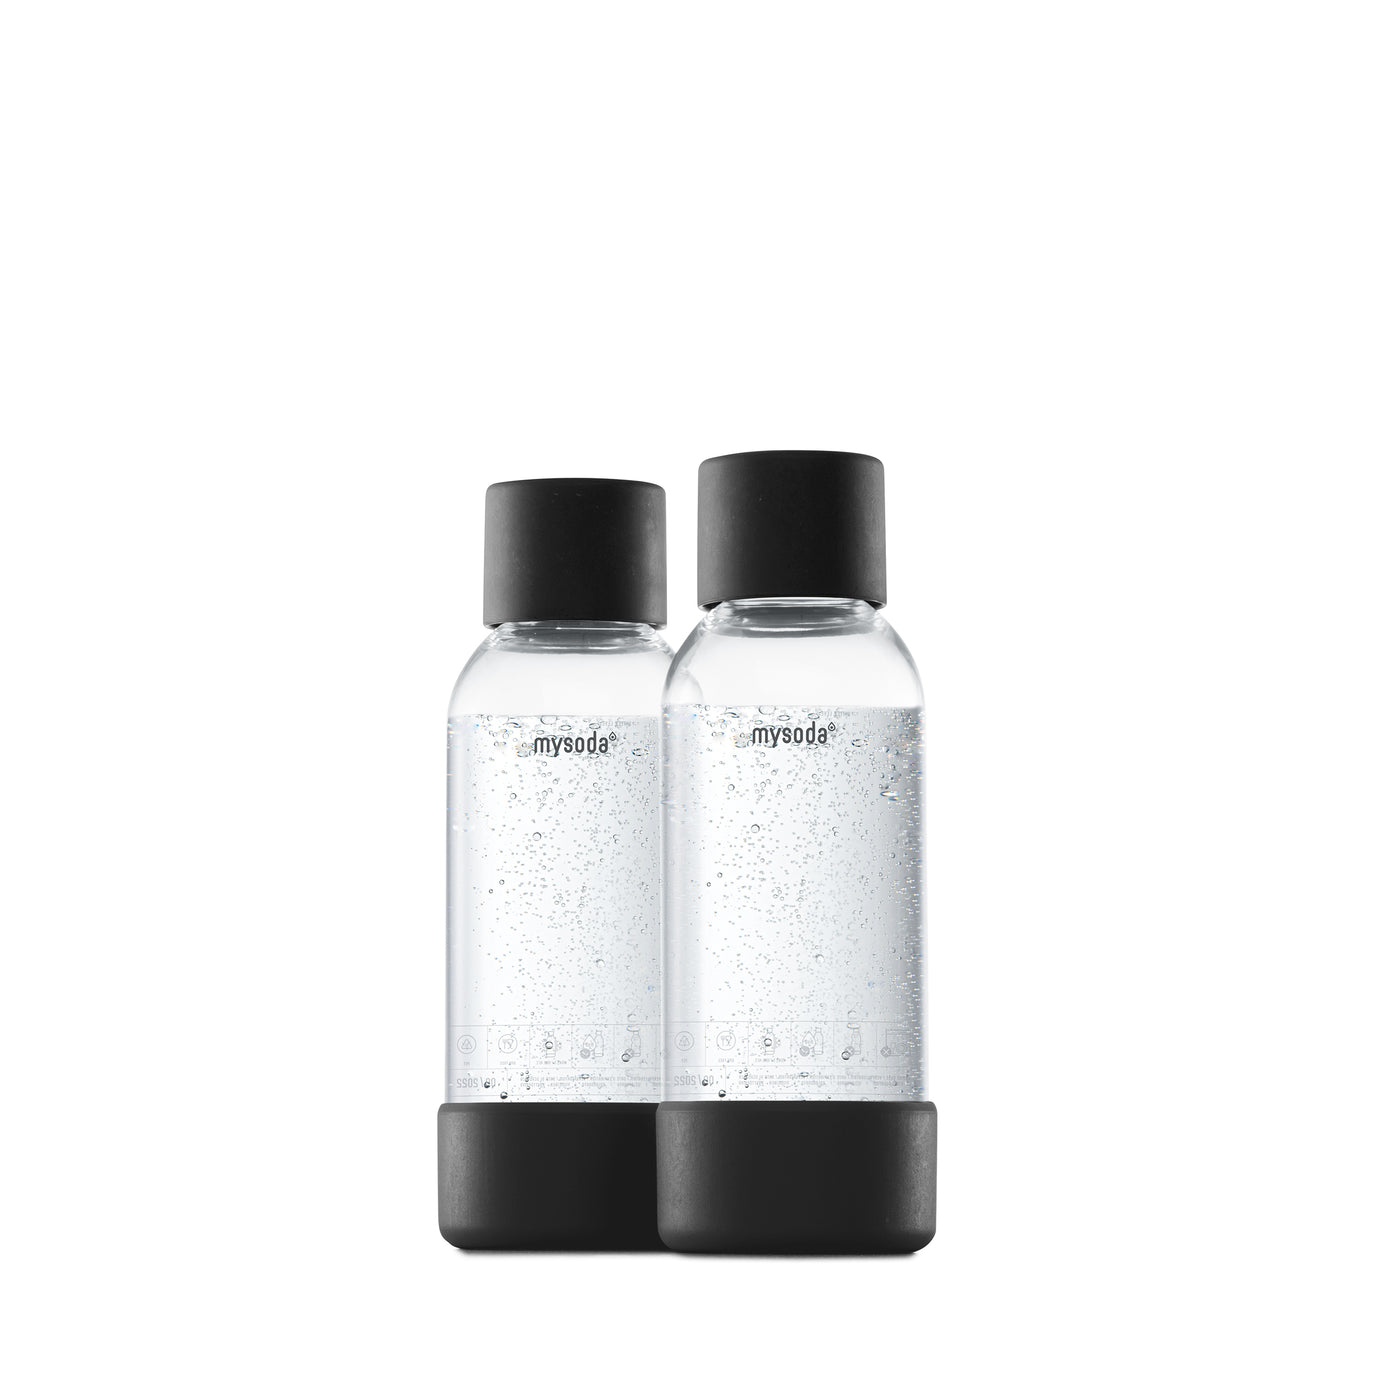 Water bottle 0.5L, 2-pack (Expiring 04/24)